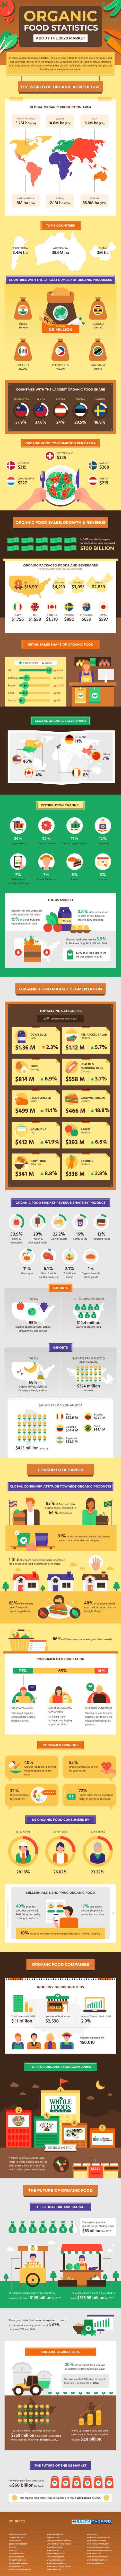 Organic Food Statistics